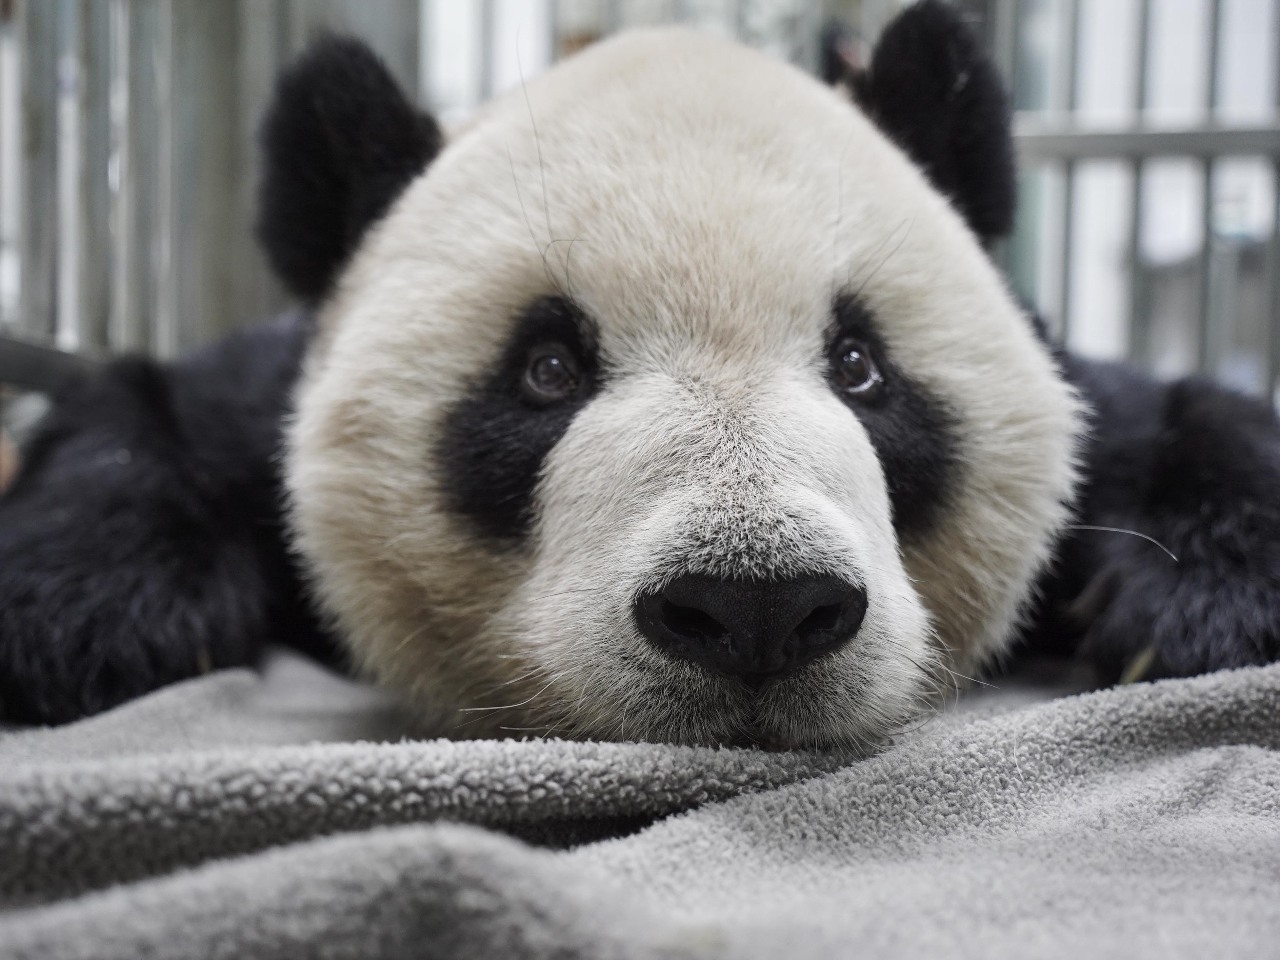 Death of Taiwan's beloved panda